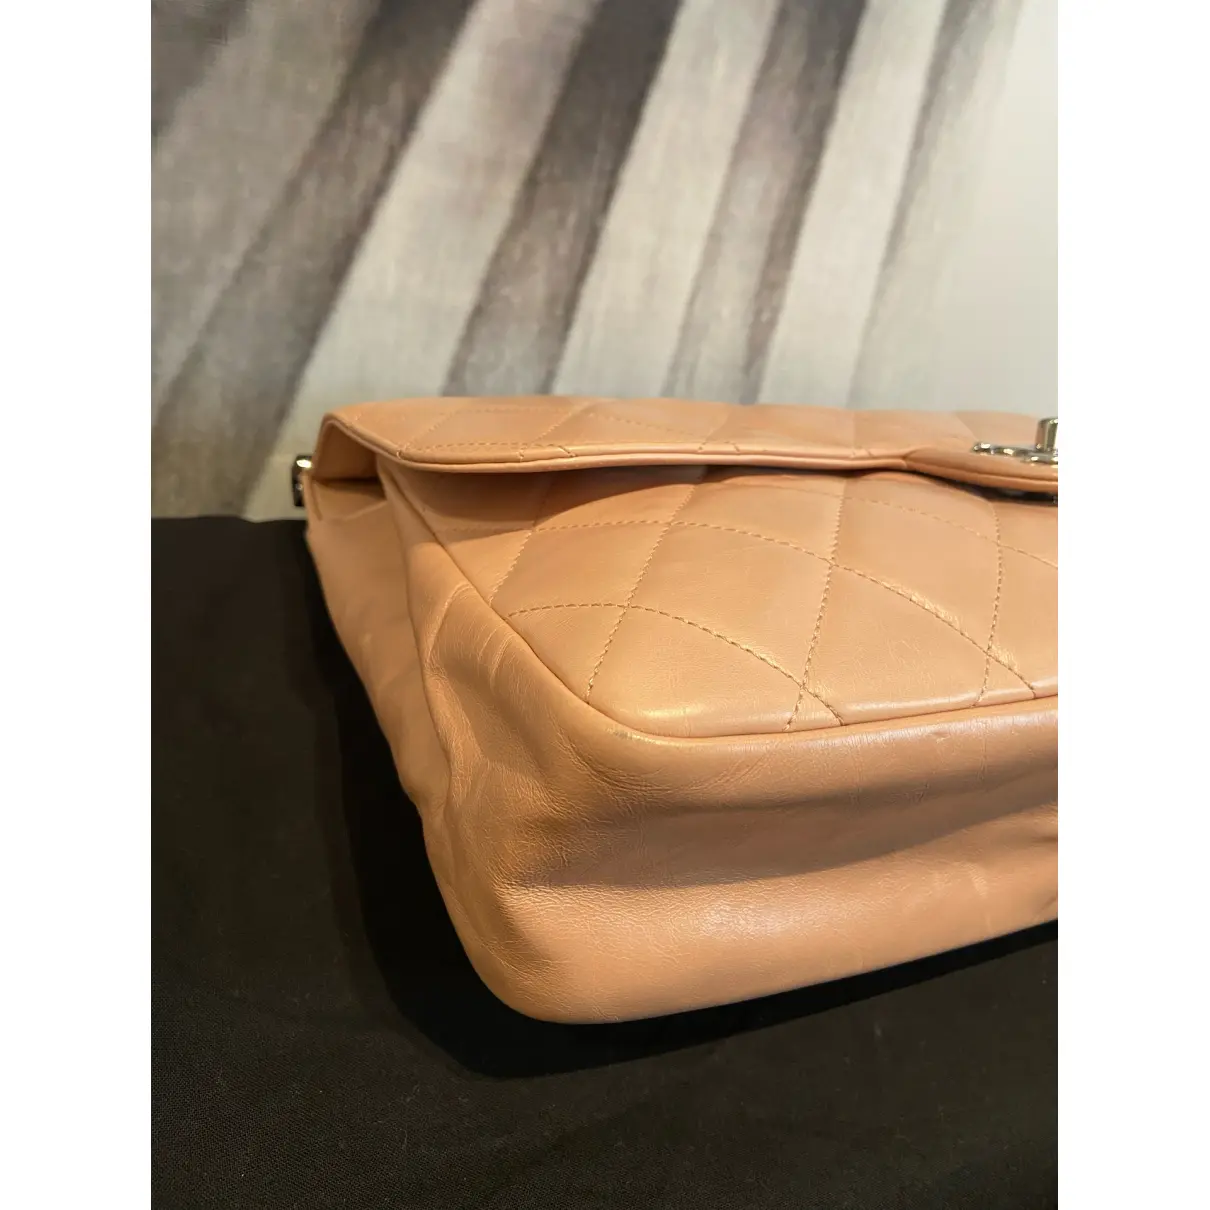 Buy Chanel Timeless/Classique leather handbag online